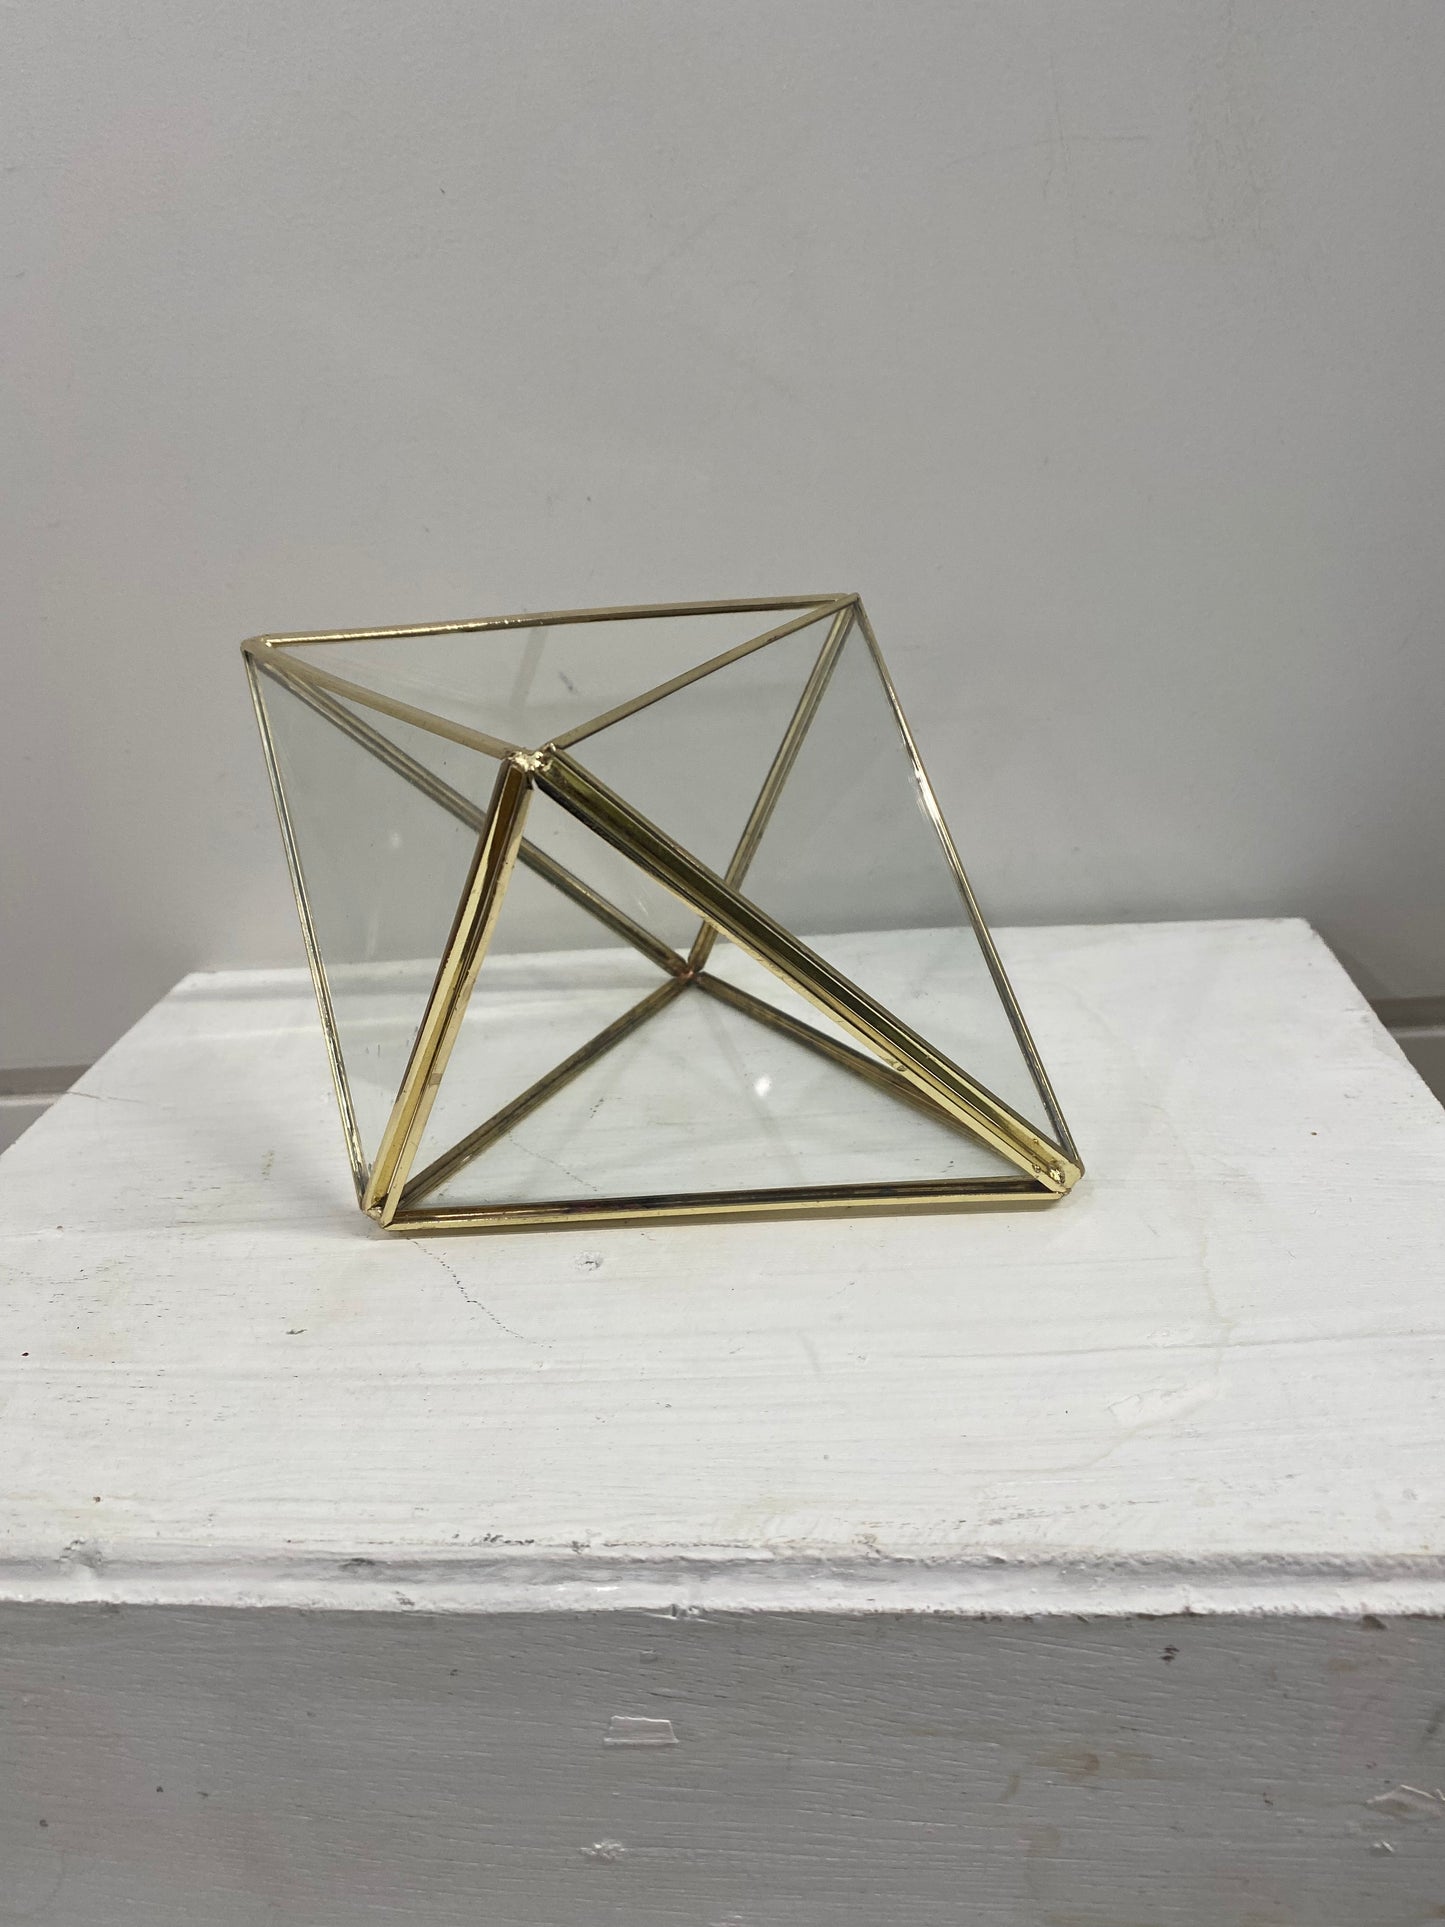 Glass Geometric Terarrium